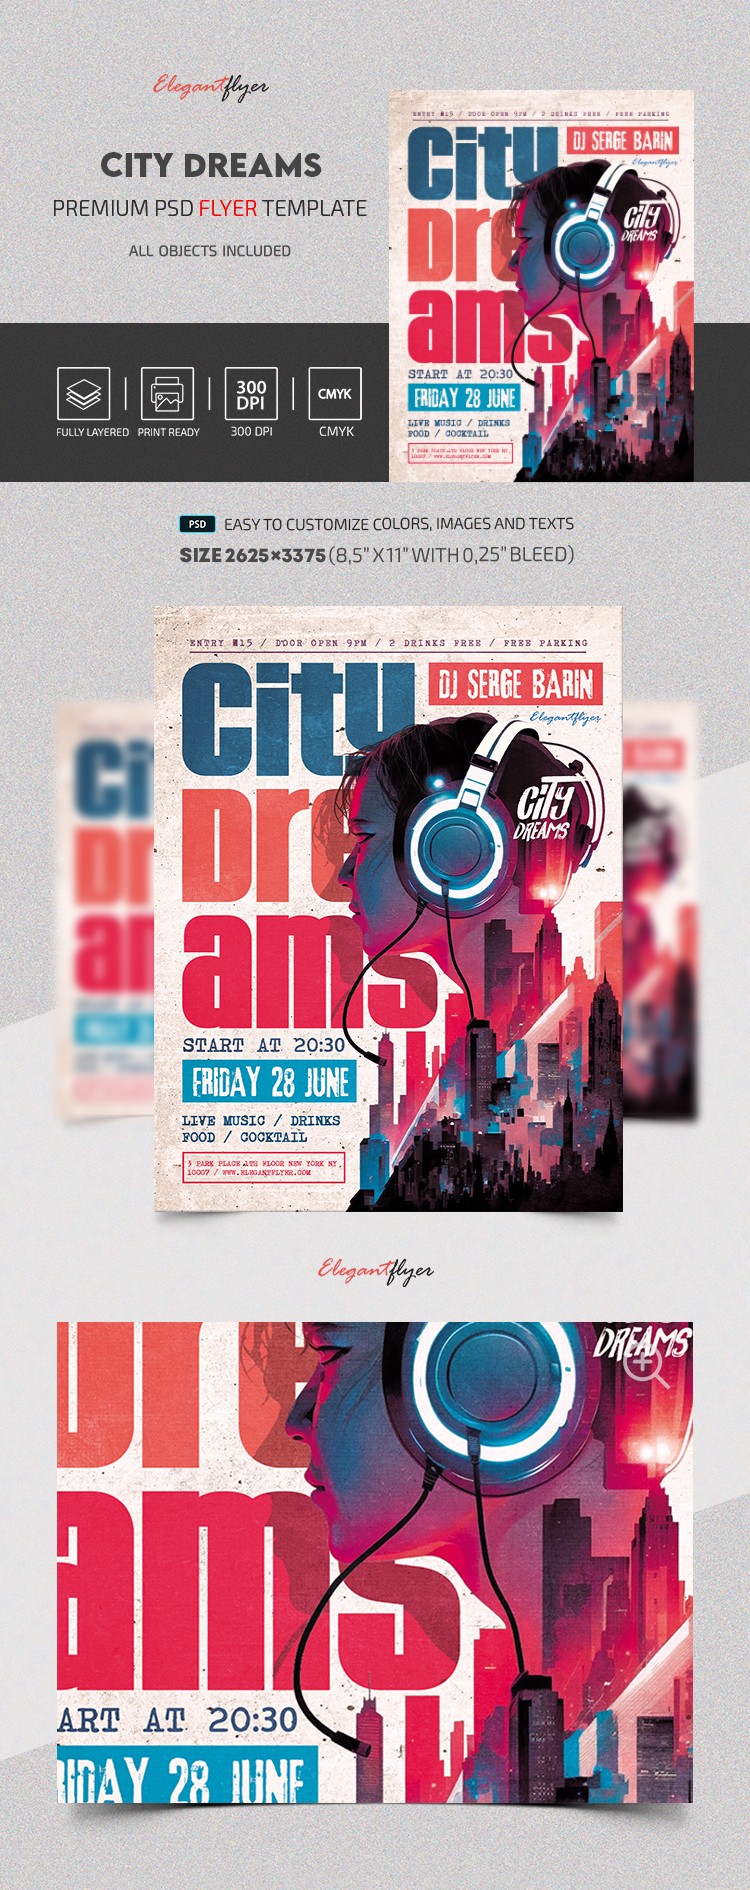 City Dreams - Premium PSD Flyer Template by ElegantFlyer